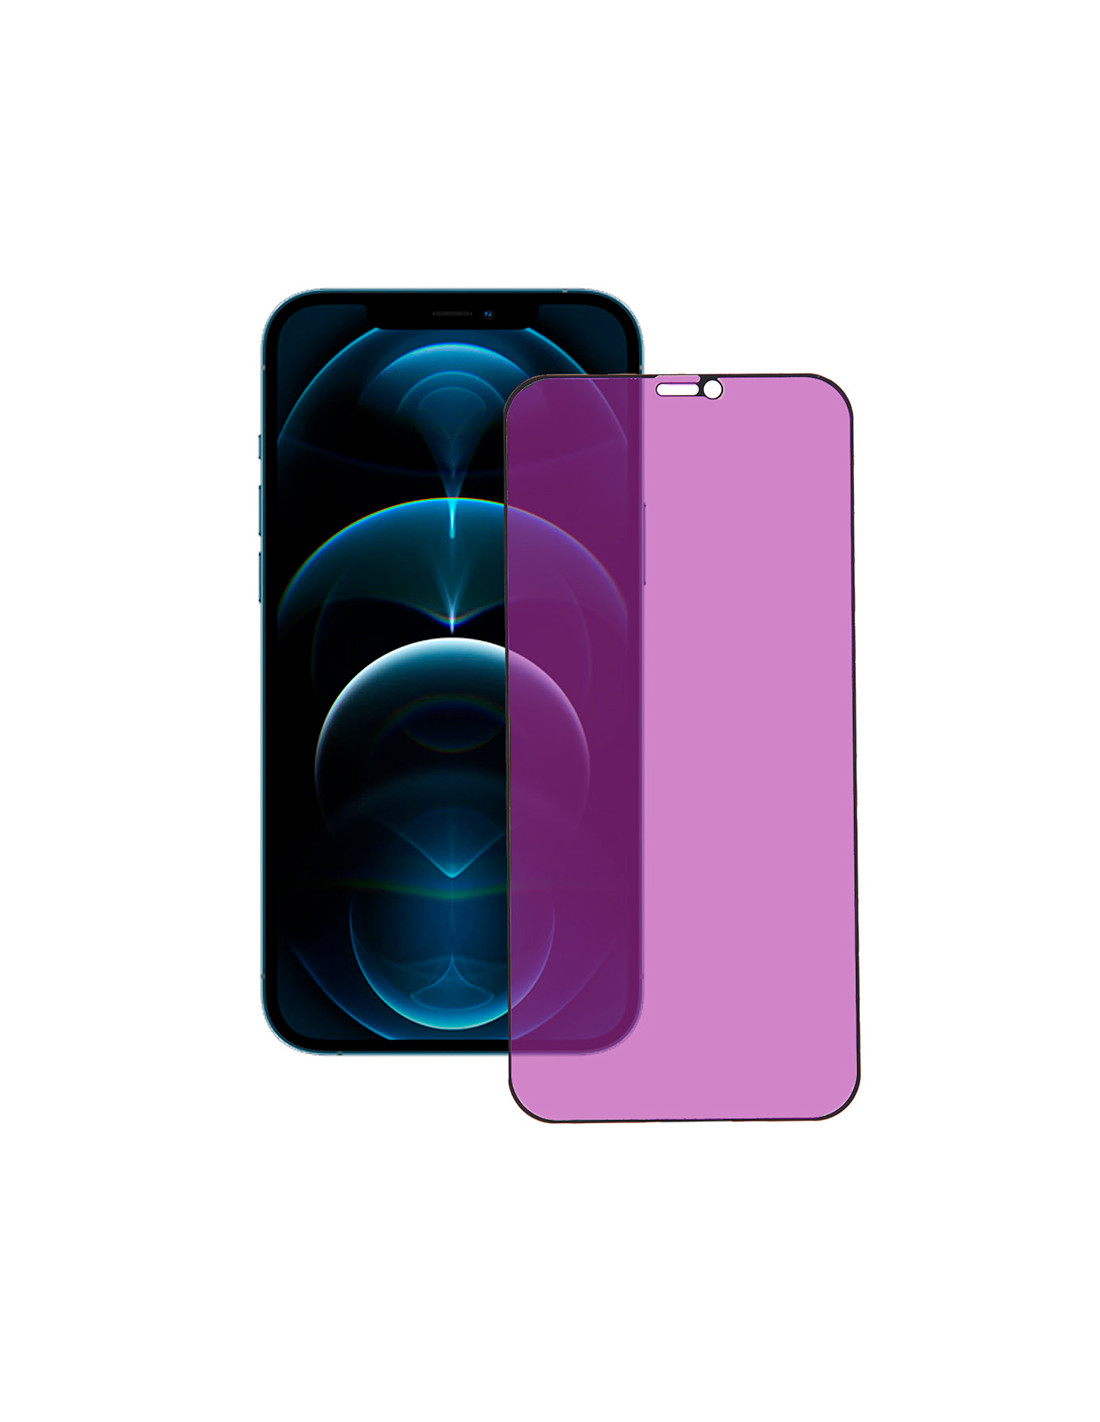 Cristal Templado Completo Anti Blue-Ray Transparente para iPhone